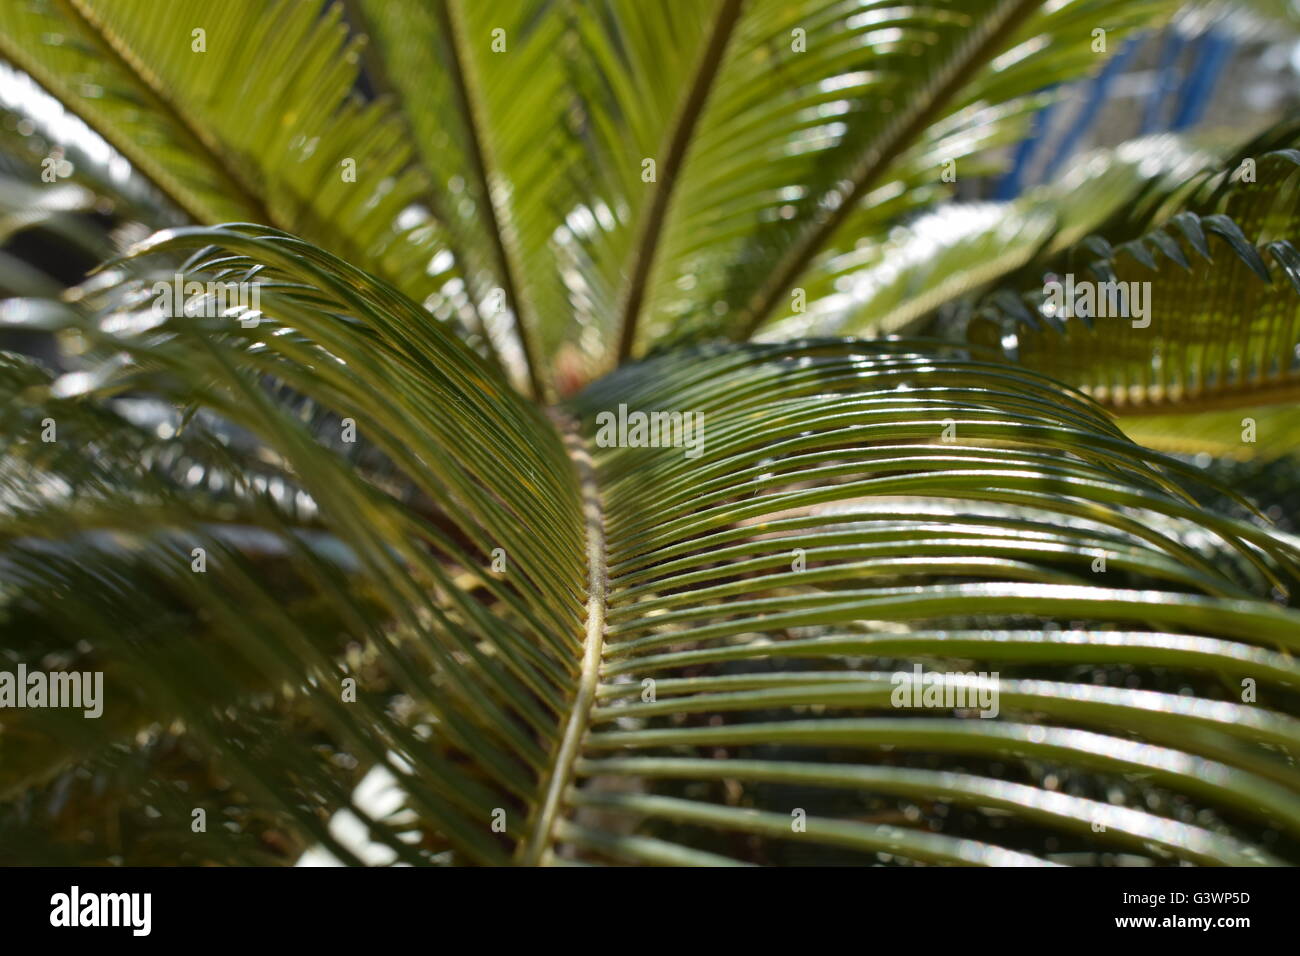 Along the ridges of a palm tree leaf Stock Photo